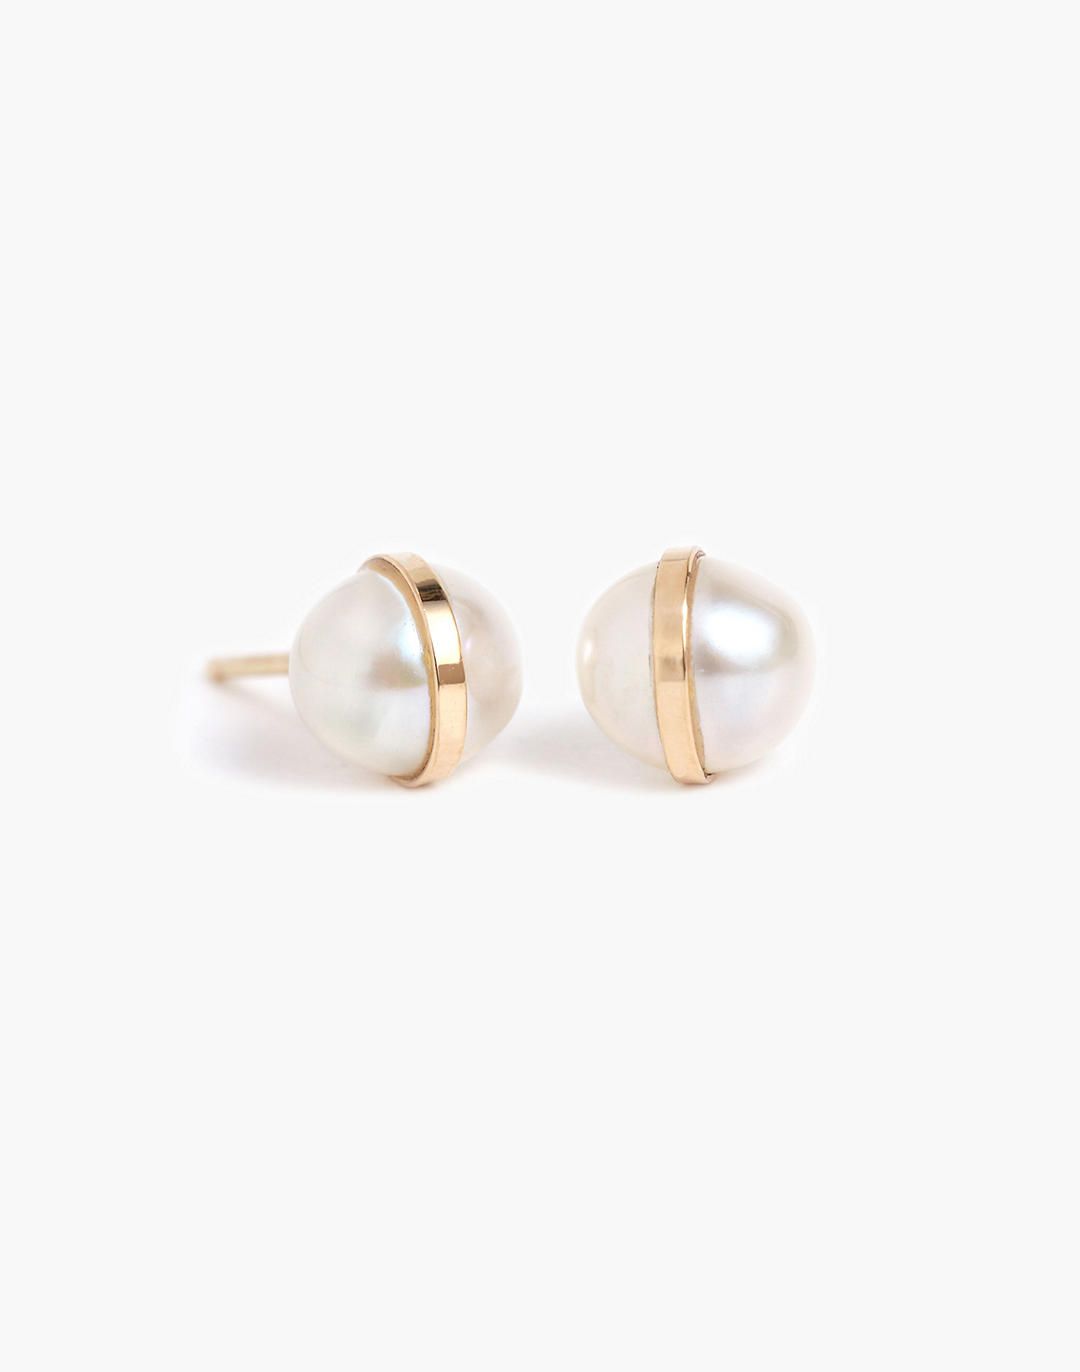 Melissa Joy Manning 14k Gold Bezel Wrap Pearl Post Earrings | Madewell